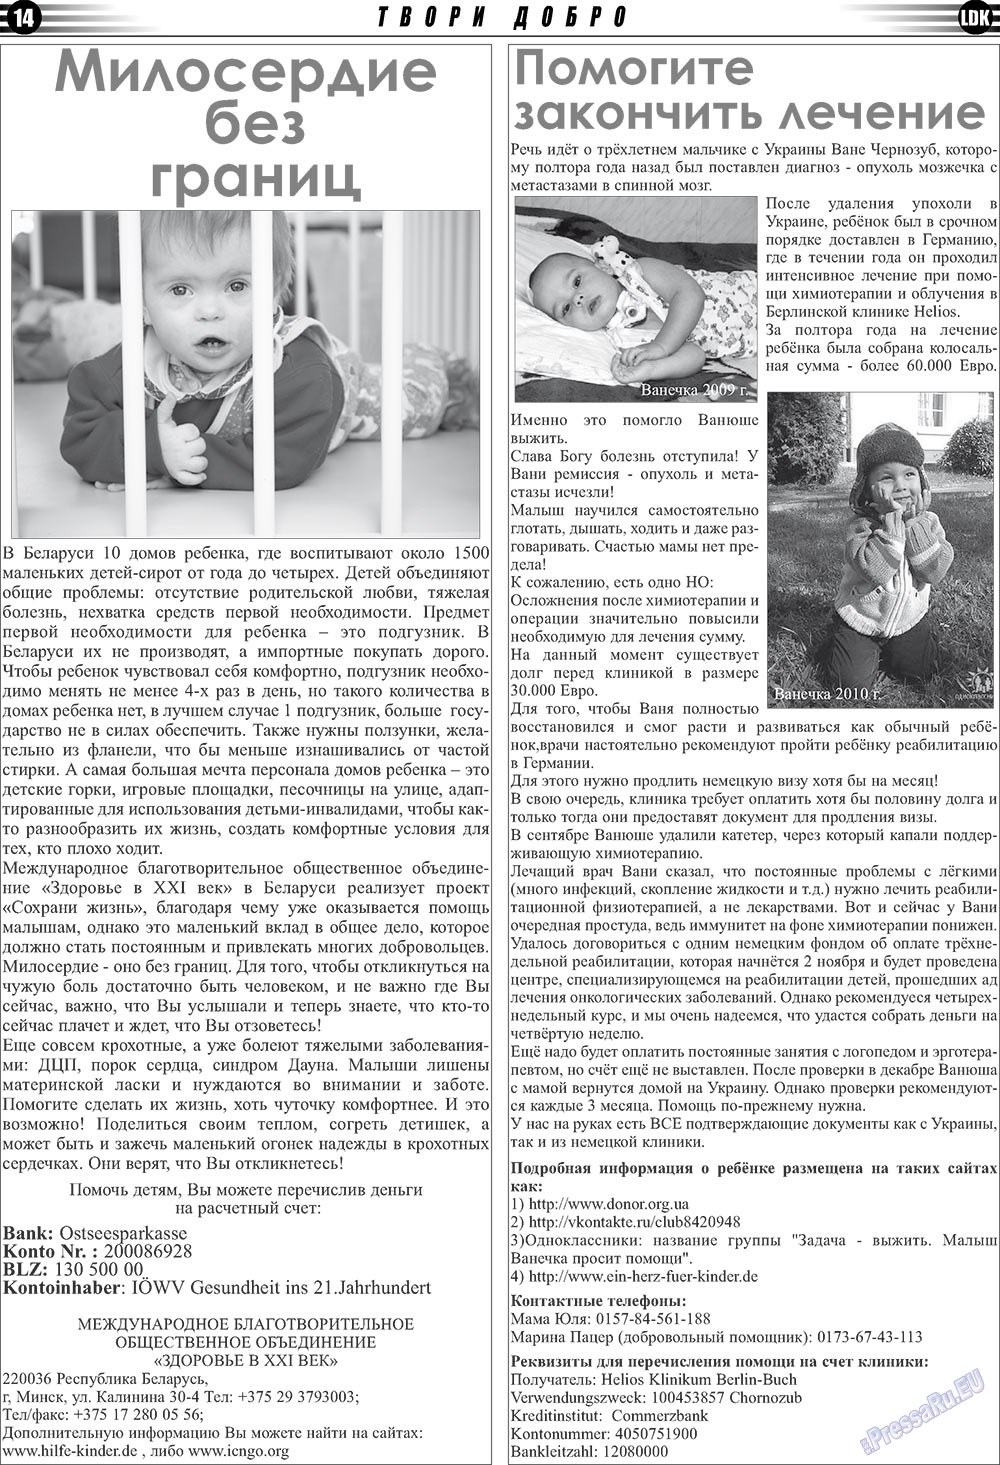 LDK по-русски, газета. 2010 №11 стр.14